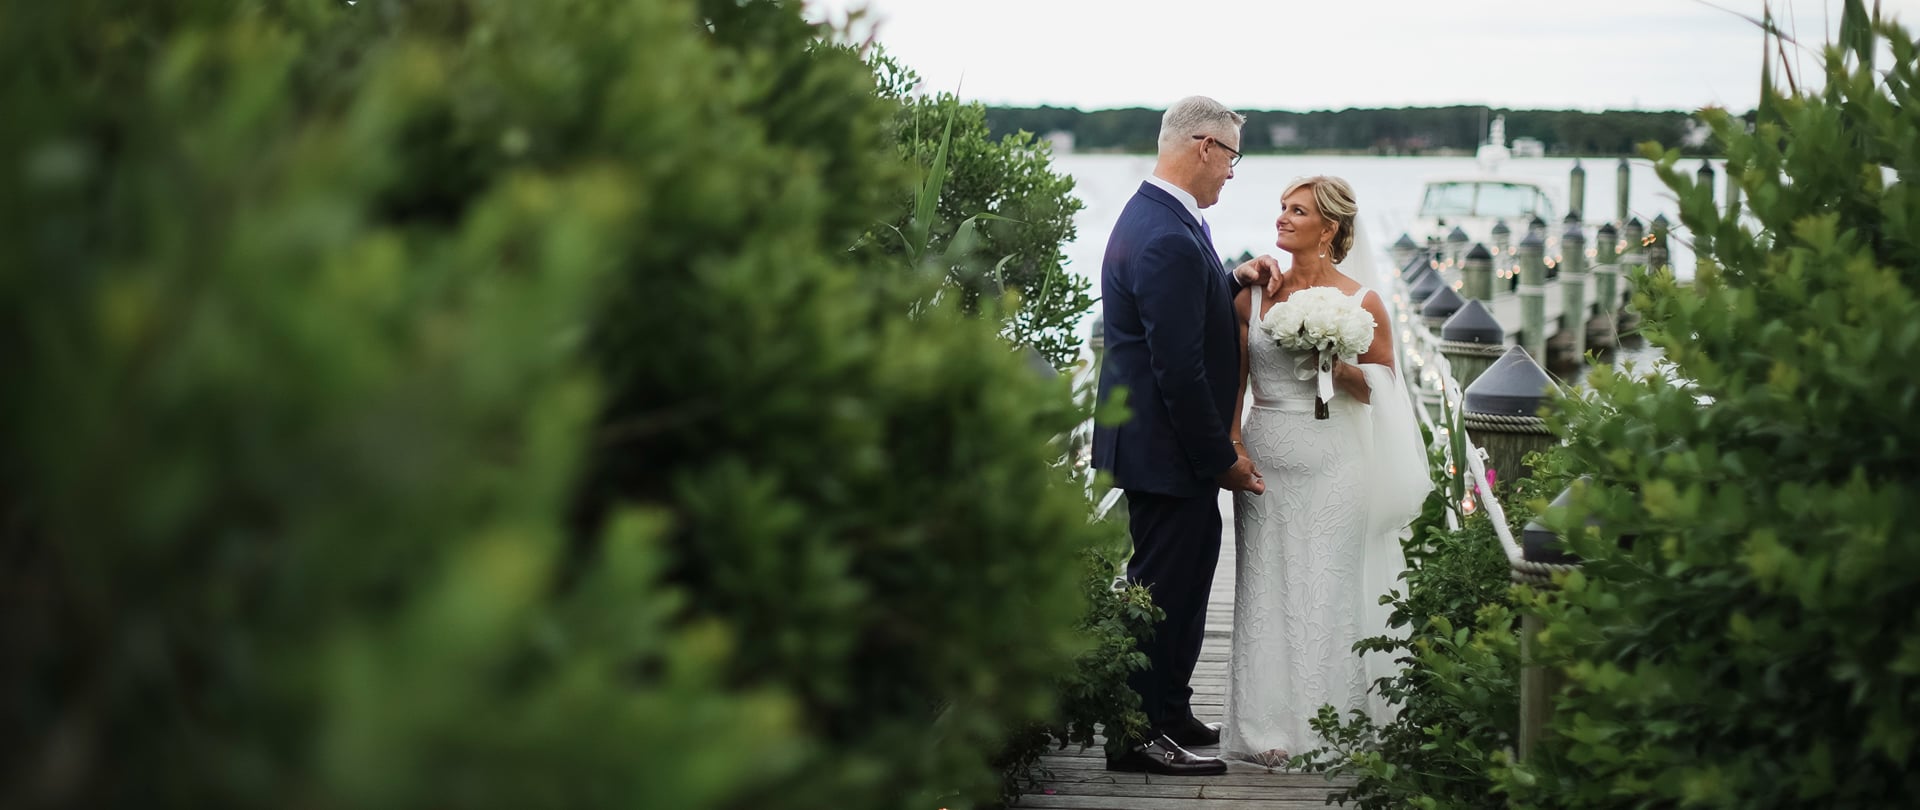 Diane & Brian Wedding Video Filmed atCape Cod,Massachusetts